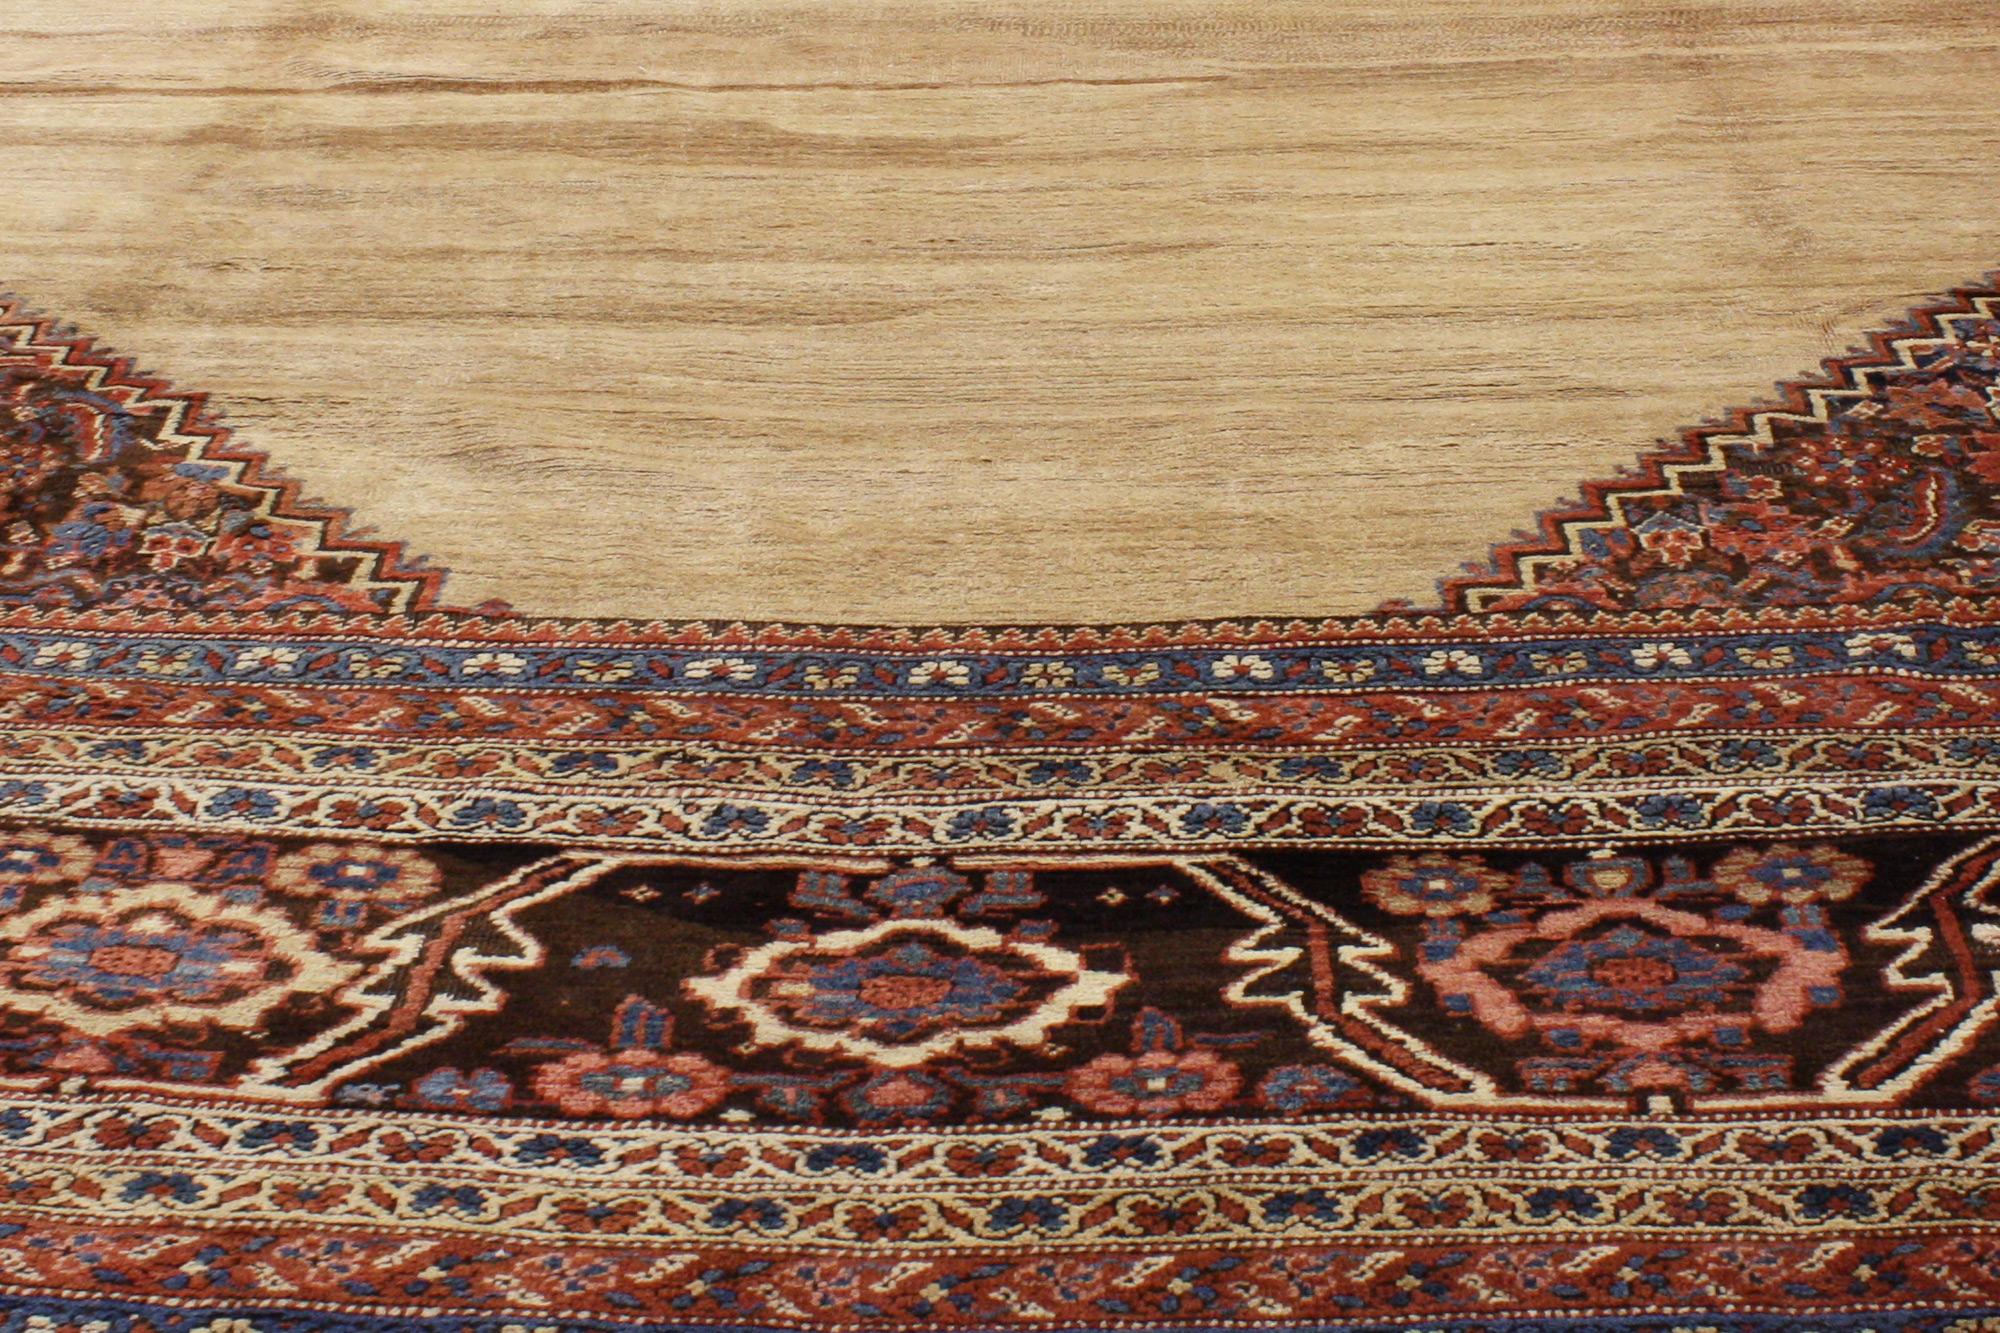 19th Century Oversized Antique Persian Bakshaish Rug, Hotel Lobby Size Carpet For Sale